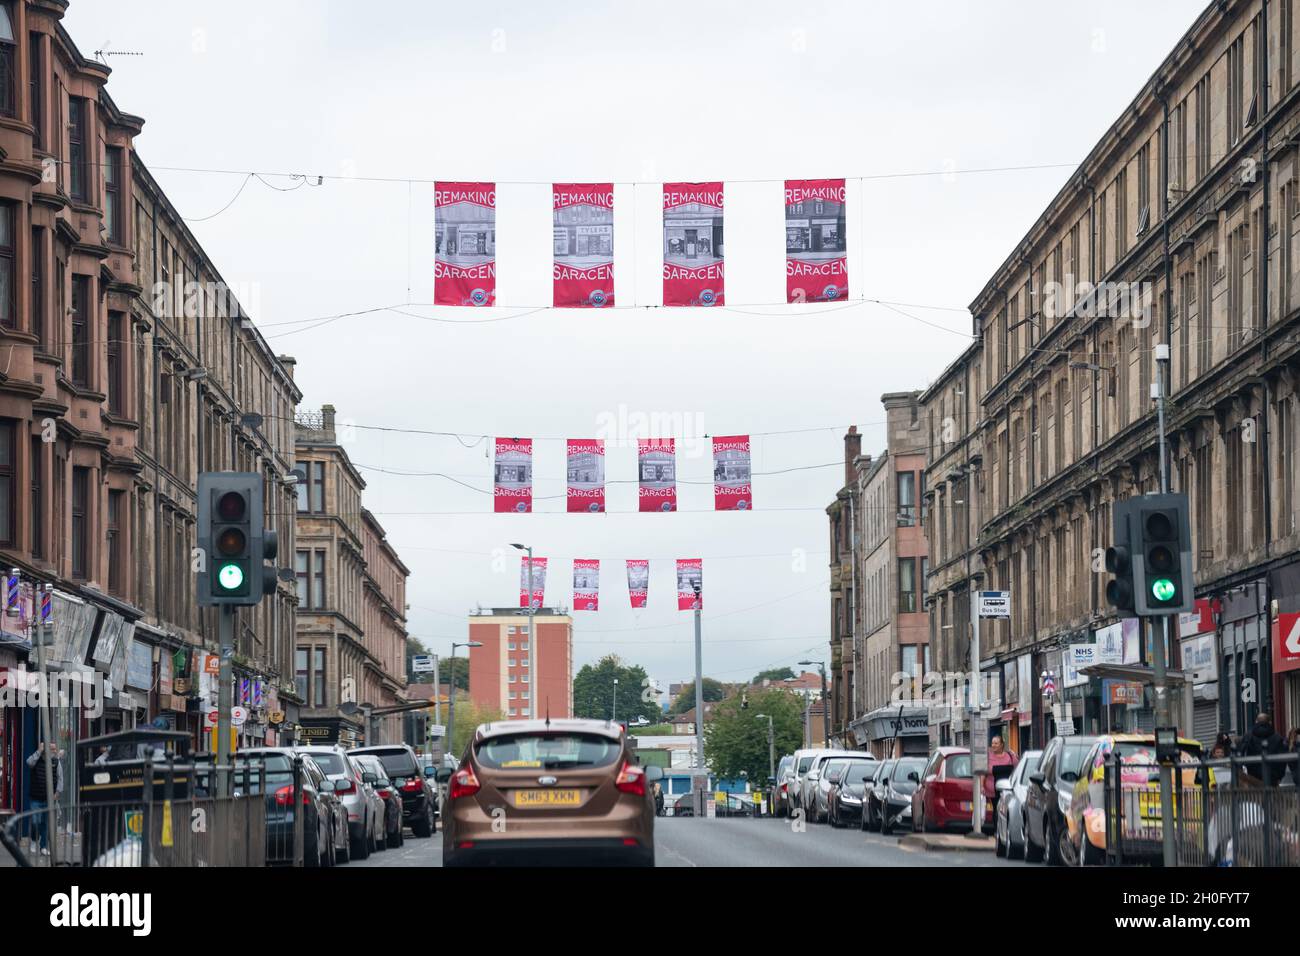 Saracen Street, Possilpark, Glasgow, Scotland, UK with Remaking Saracen logo banners created by designer Maeve Redmond for Possilpark BID Stock Photo